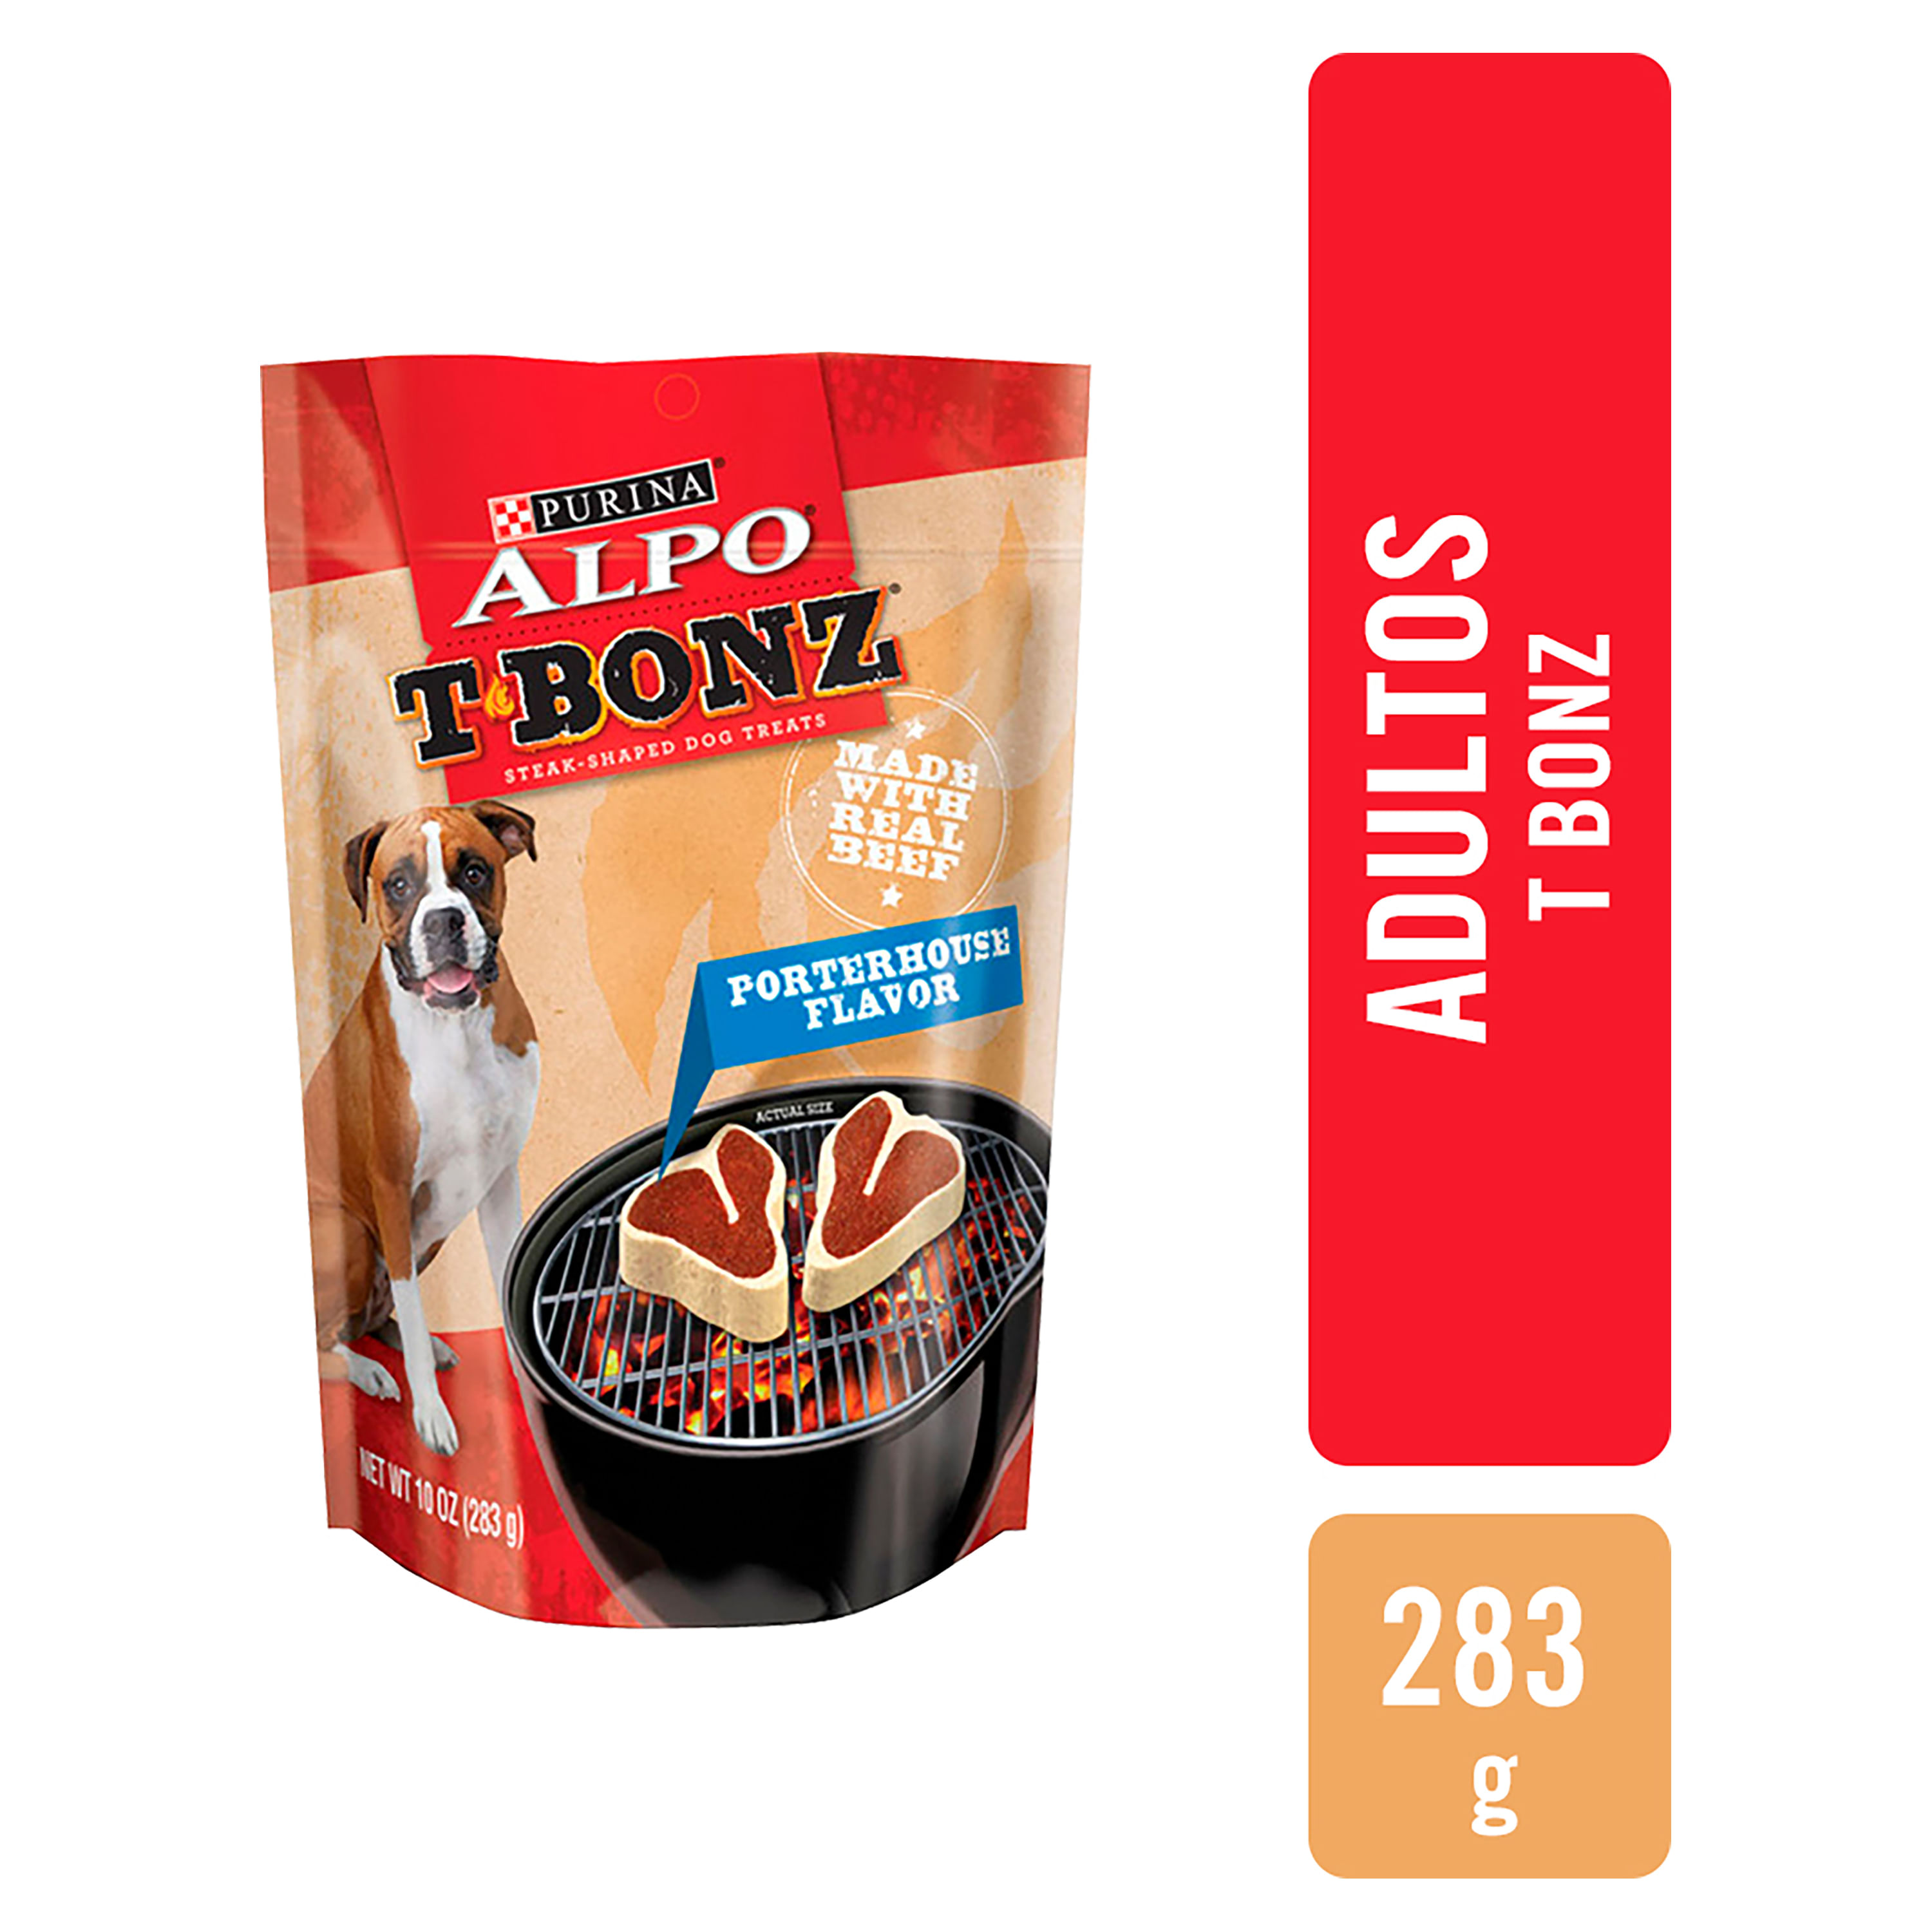 Snacks-Purina-Alpo-TBonz-Porterhouse-283g-1-776